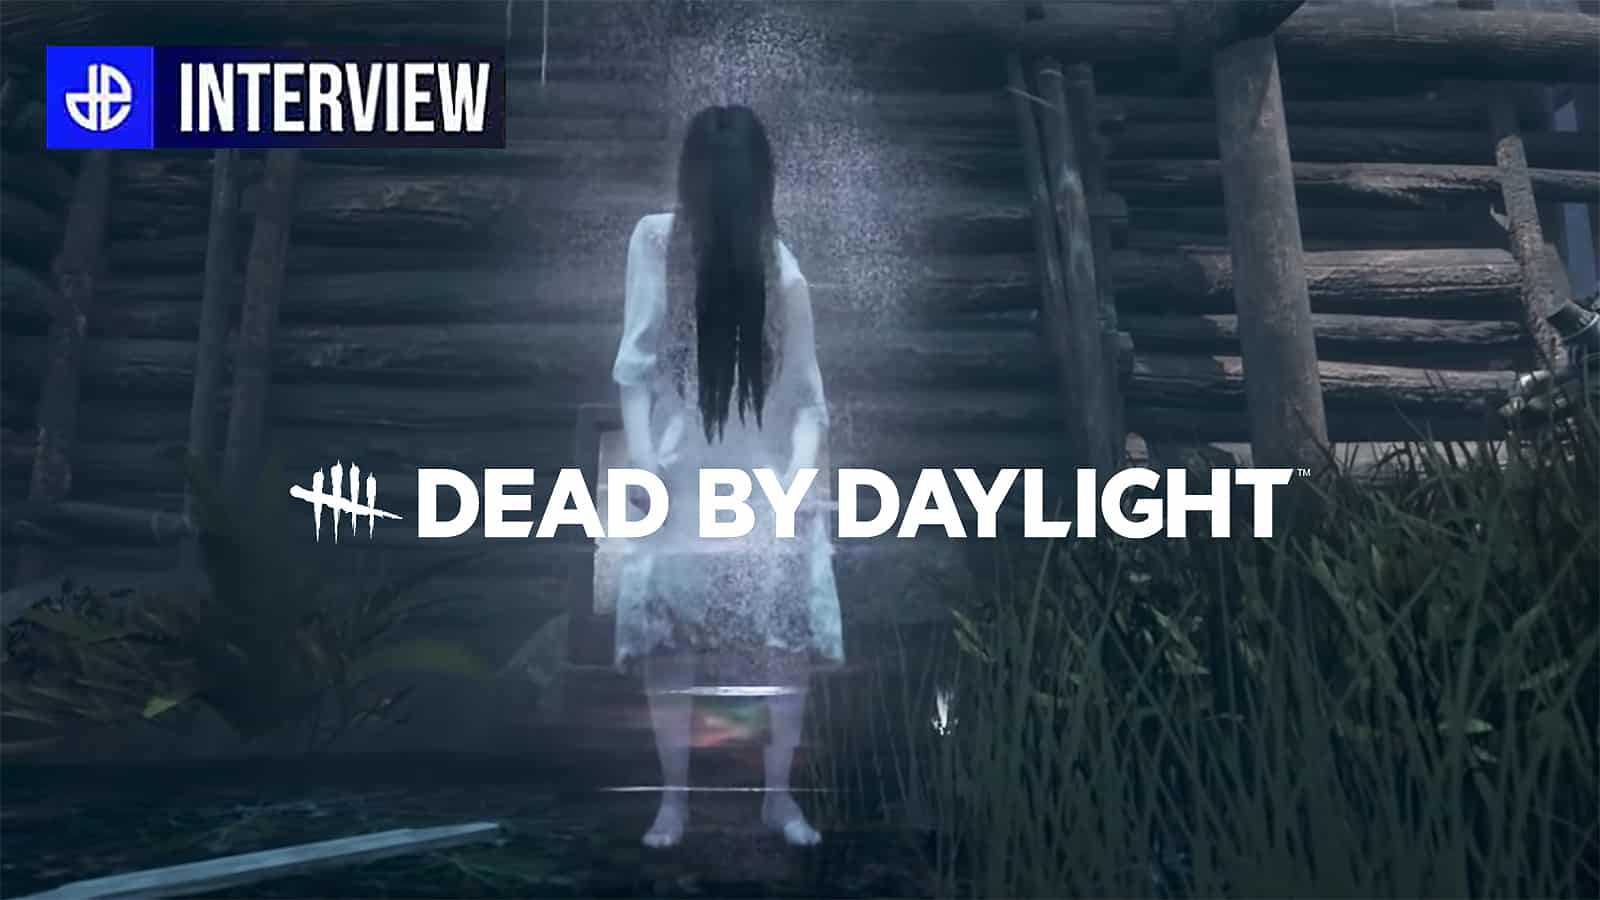 An image of Sadako, a Killer in Dead by Daylight